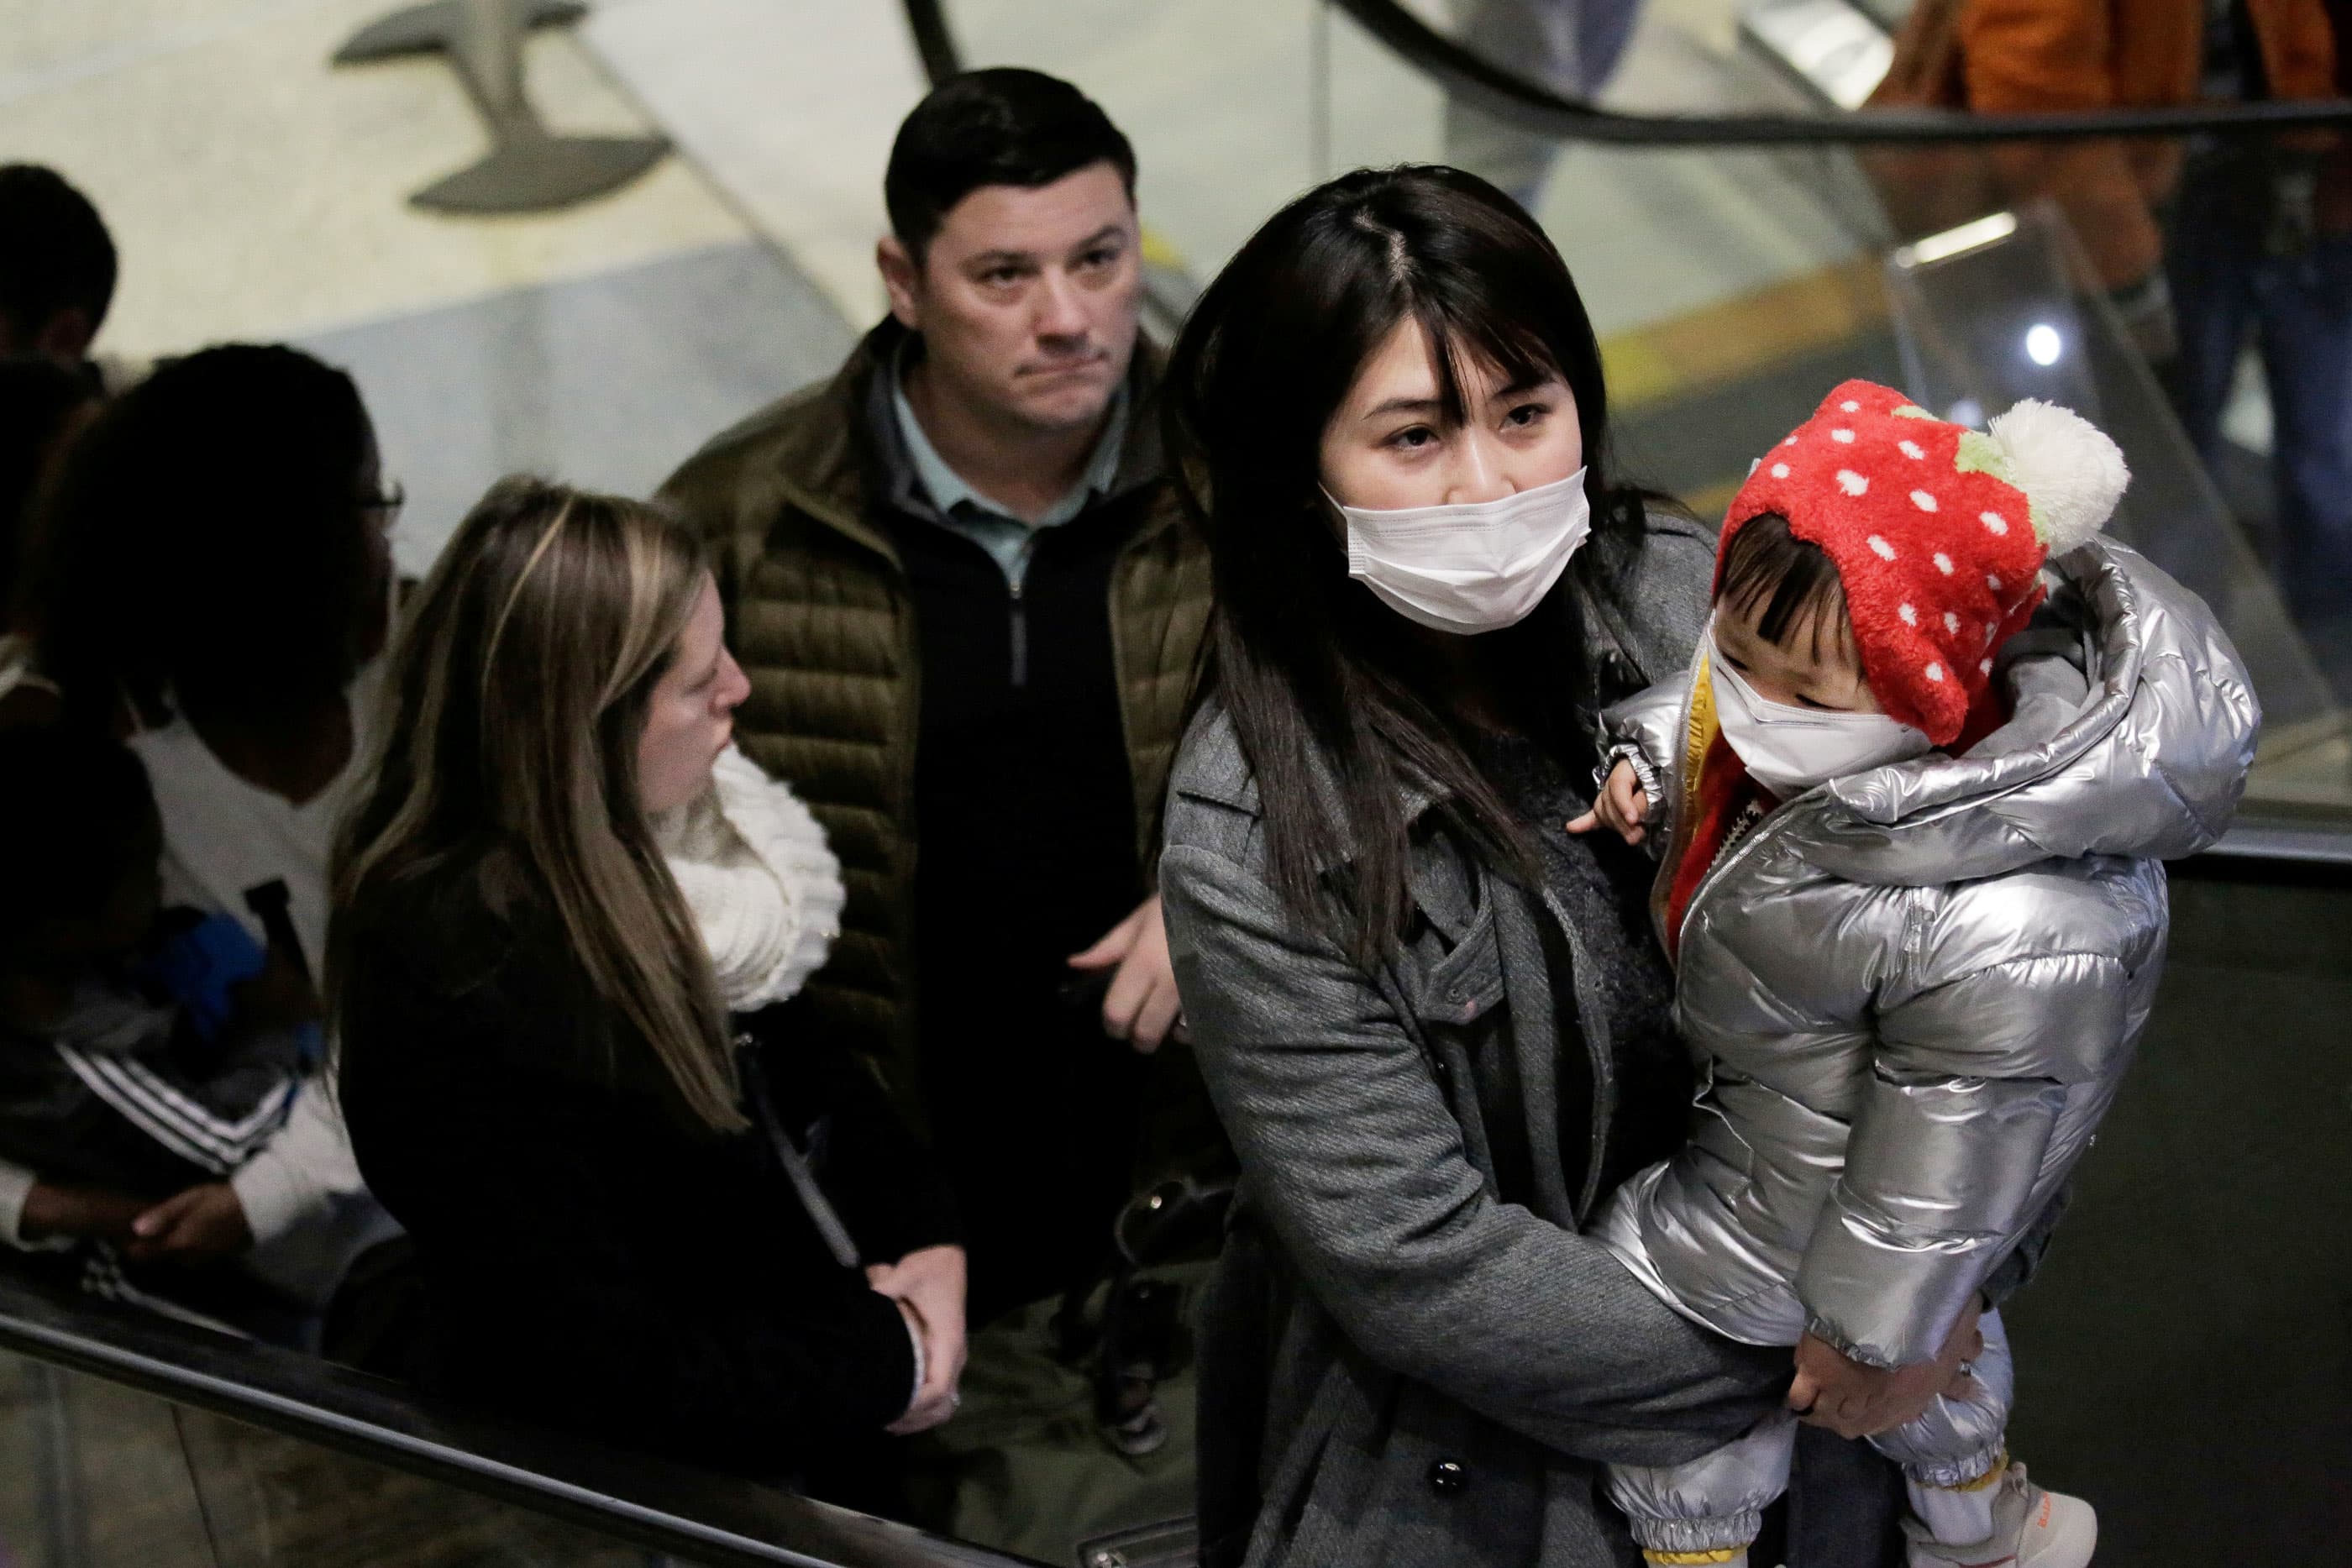 China Coronavirus Shortage Of Face Masks Could Pose Risks For